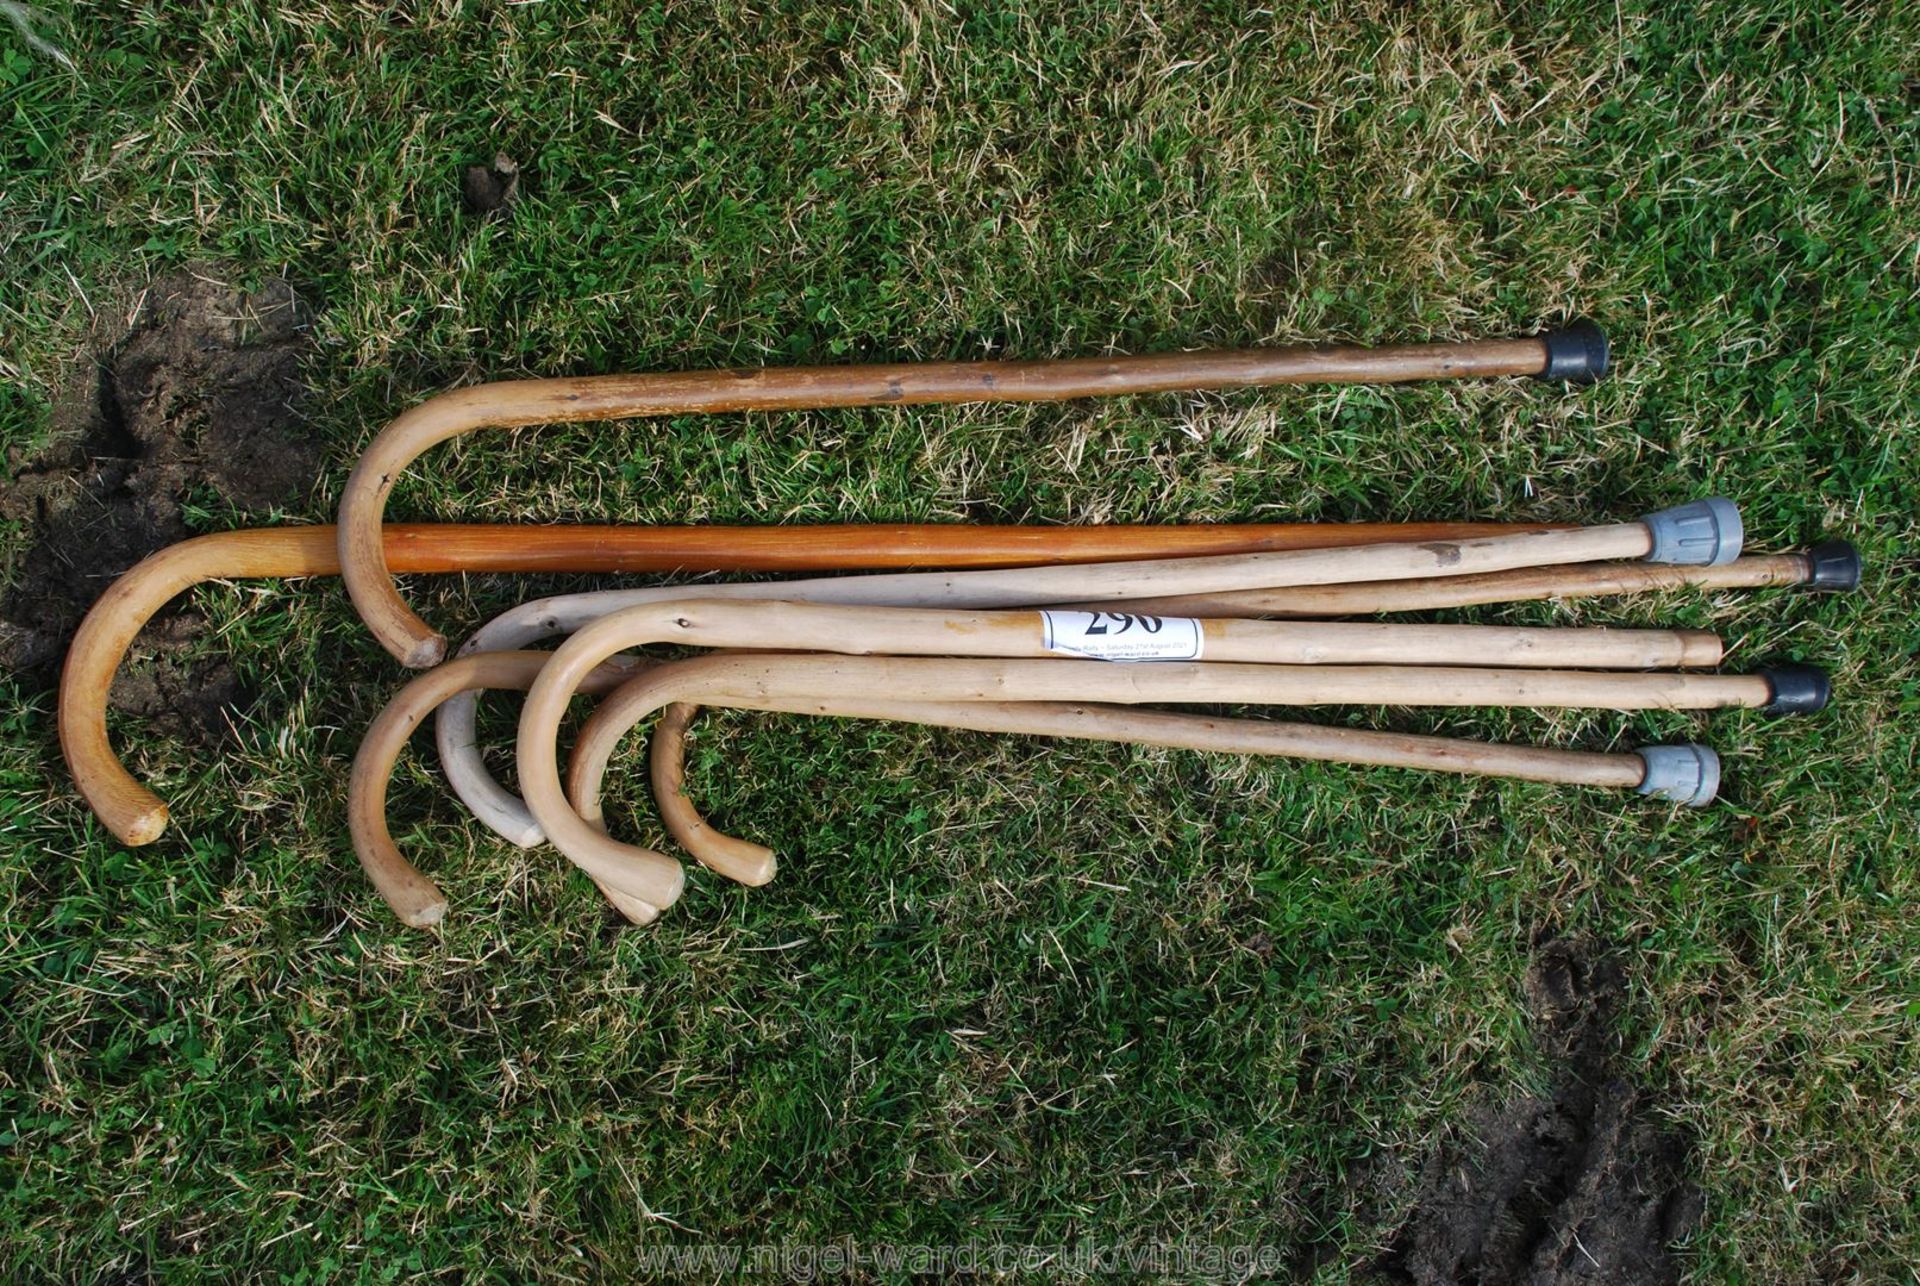 Seven wooden walking sticks.